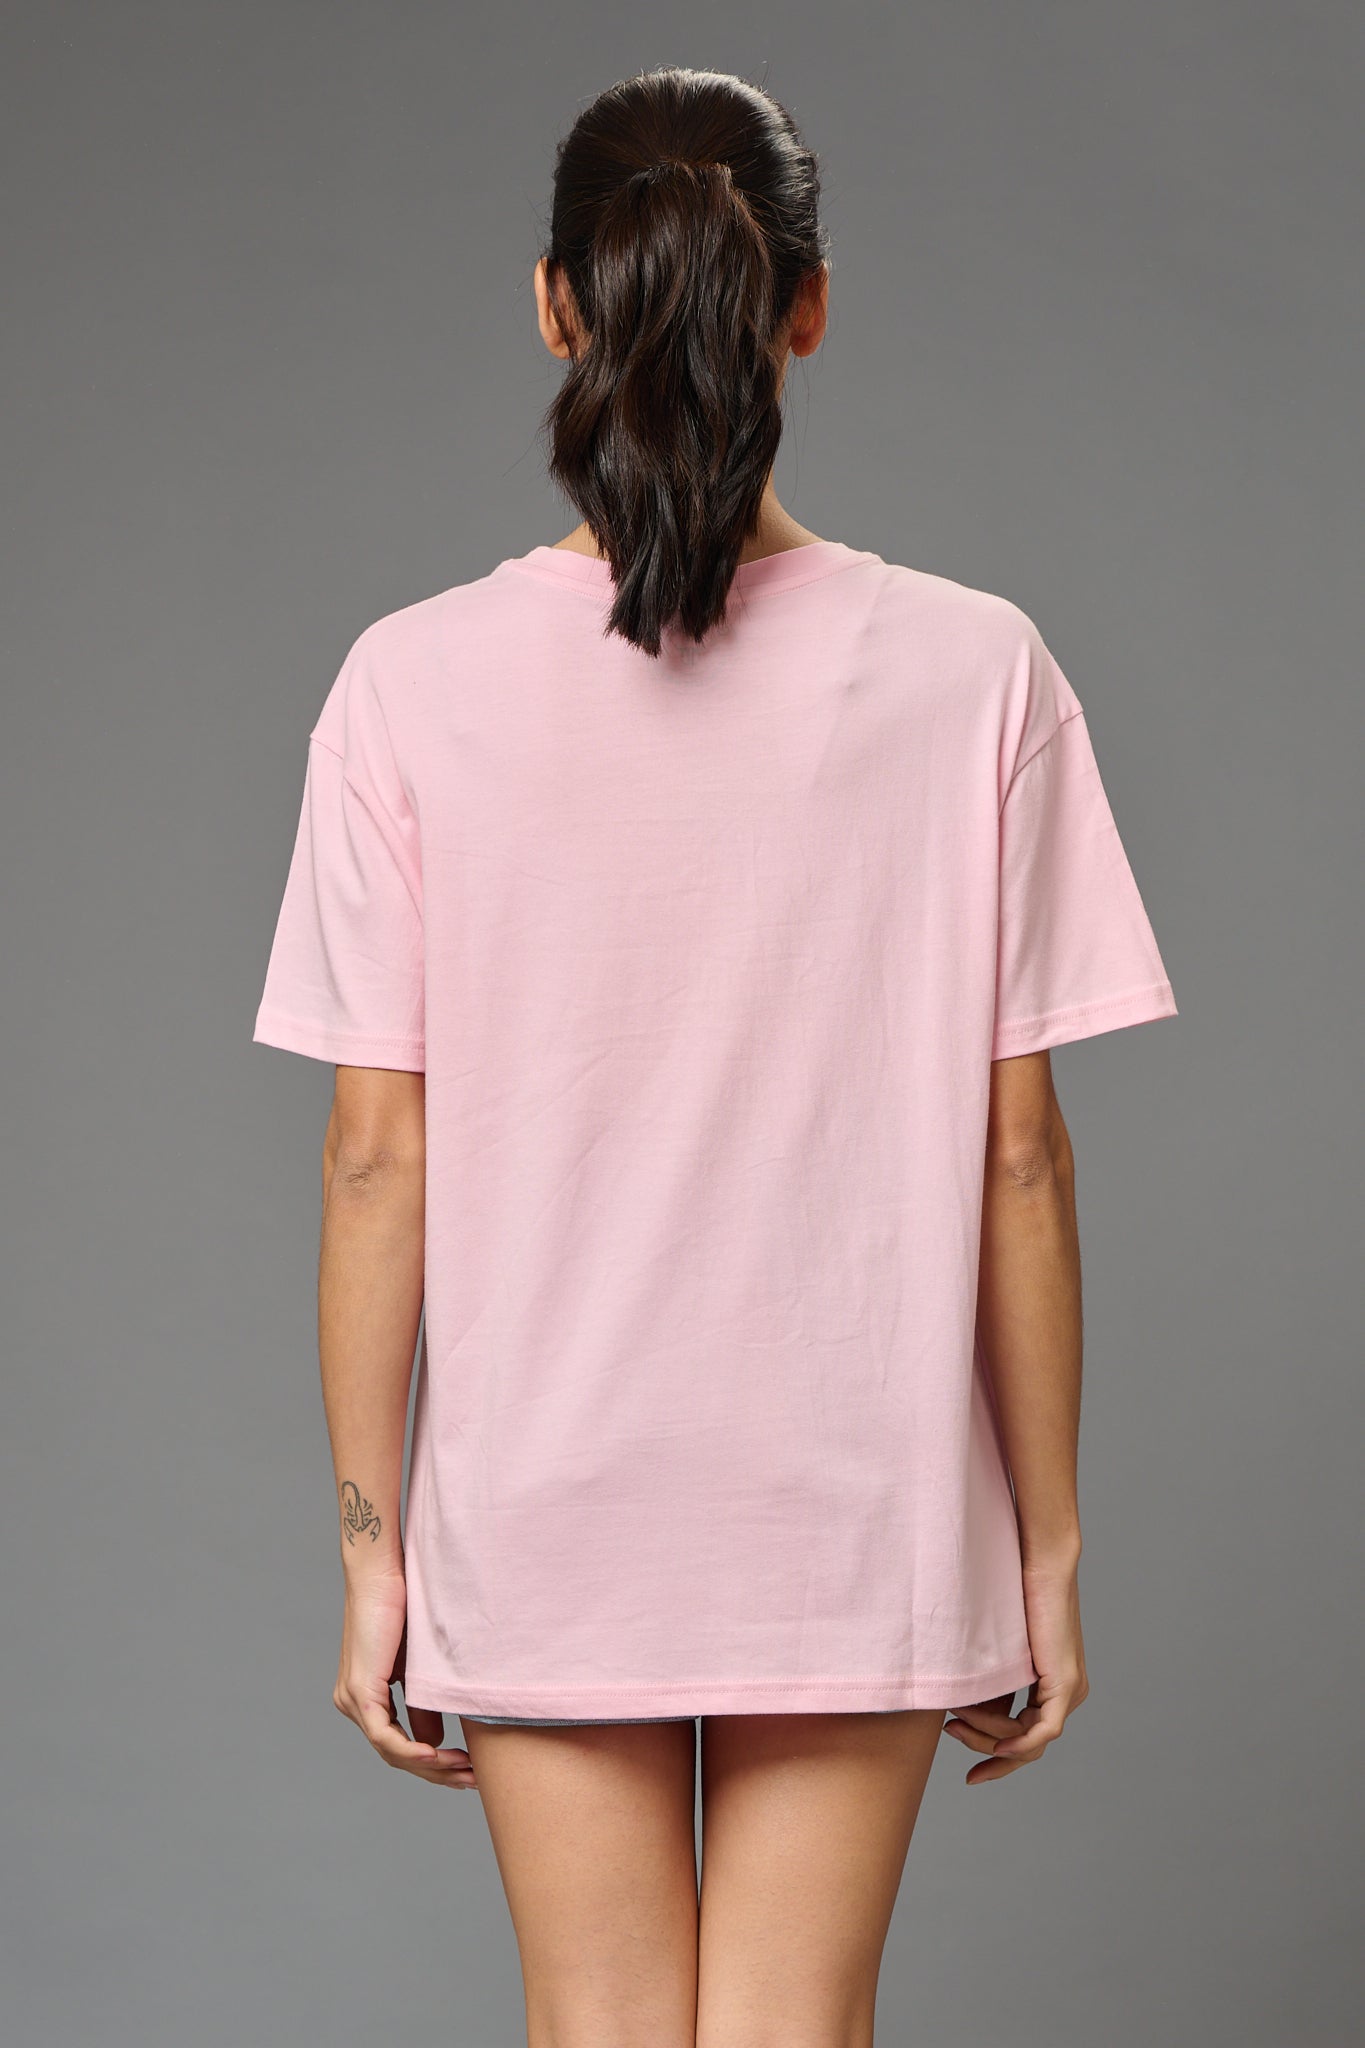 Don't Call me Angel Baby Pink Oversized T-Shirt for Women - Go Devil